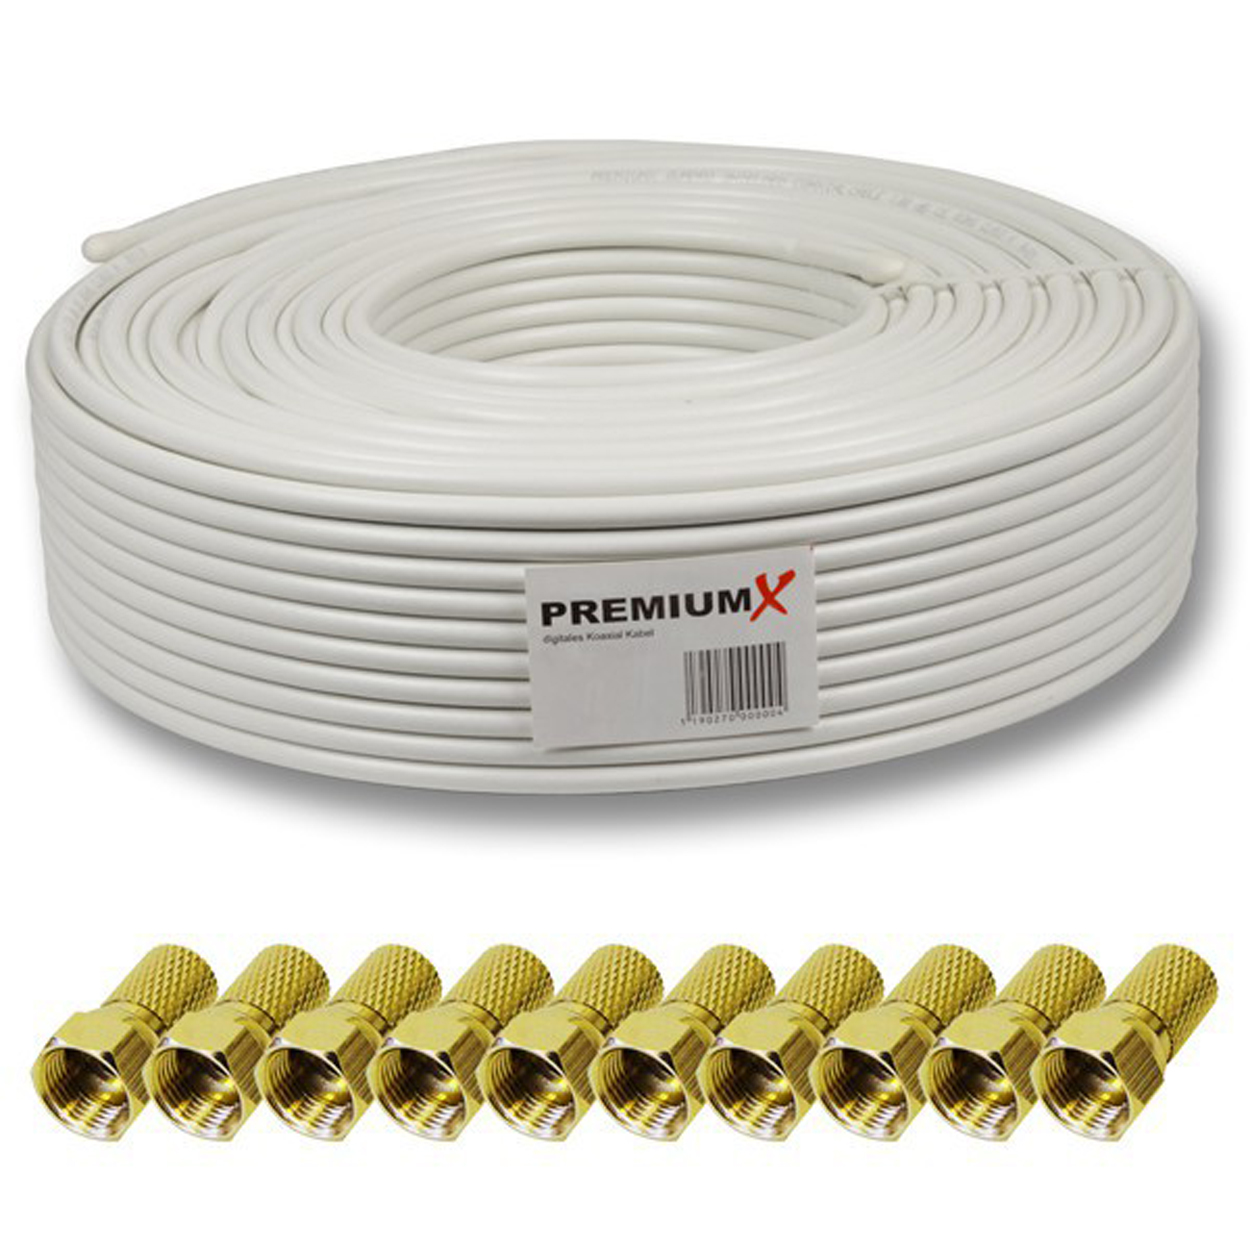 PREMIUMX PROFI PRO Koaxial SAT 10 135 geschirmt Kabel 100 F-Stecker Antennenkabel Antennenkabel dB 5-Fach Meter